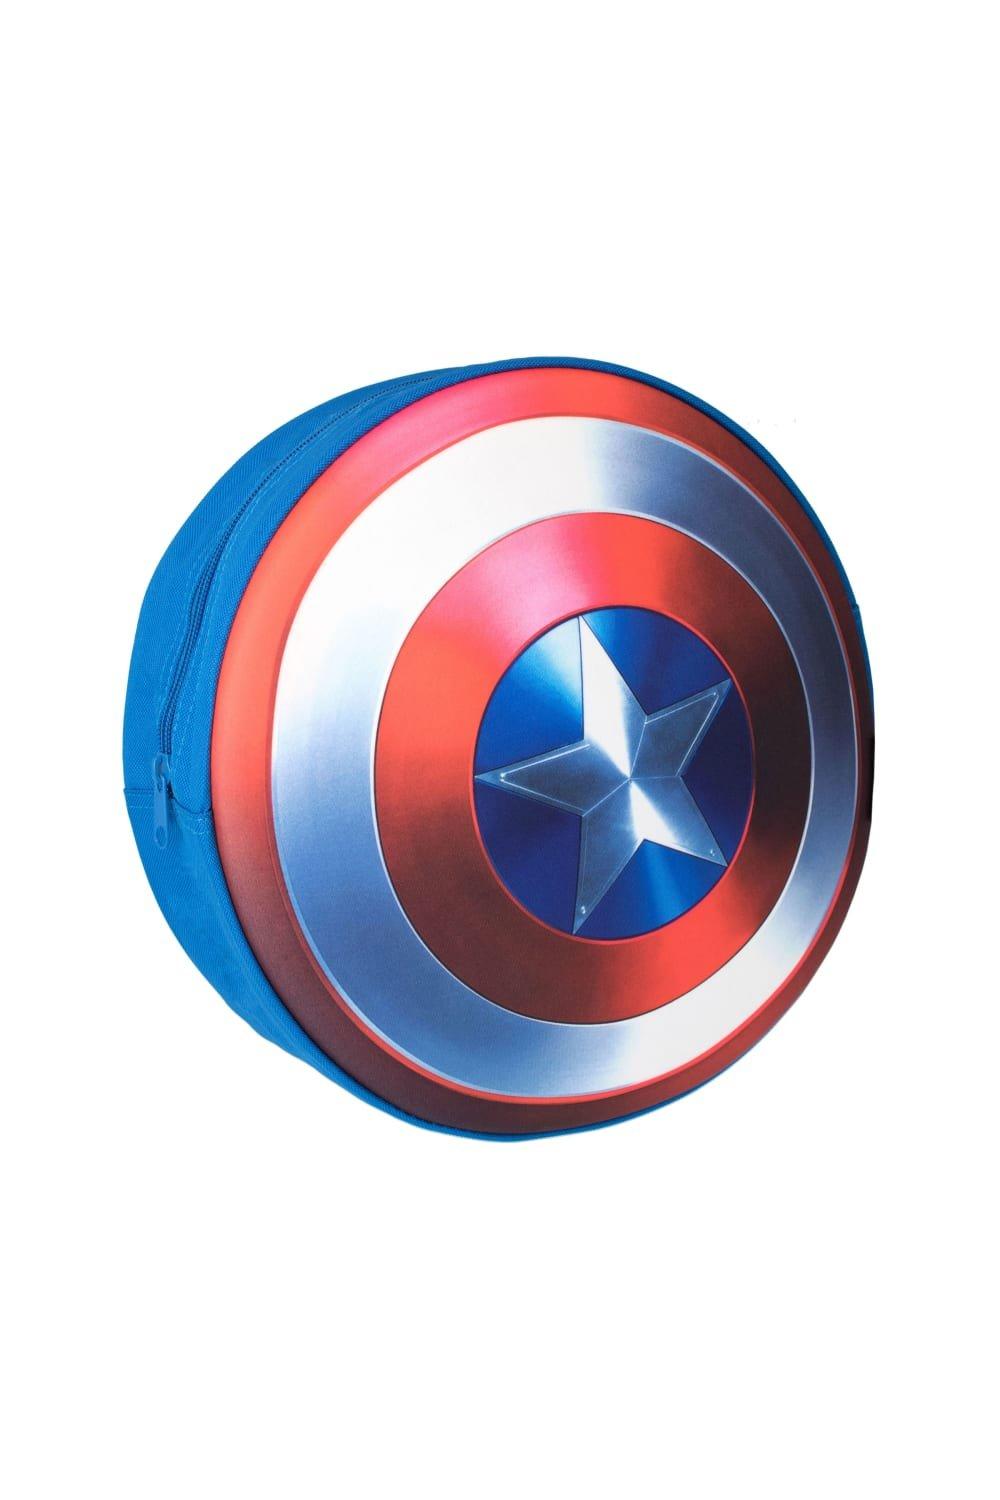 avengers игрушка экипировка капитана америка Детский рюкзак со щитом Капитана Америки Avengers, синий